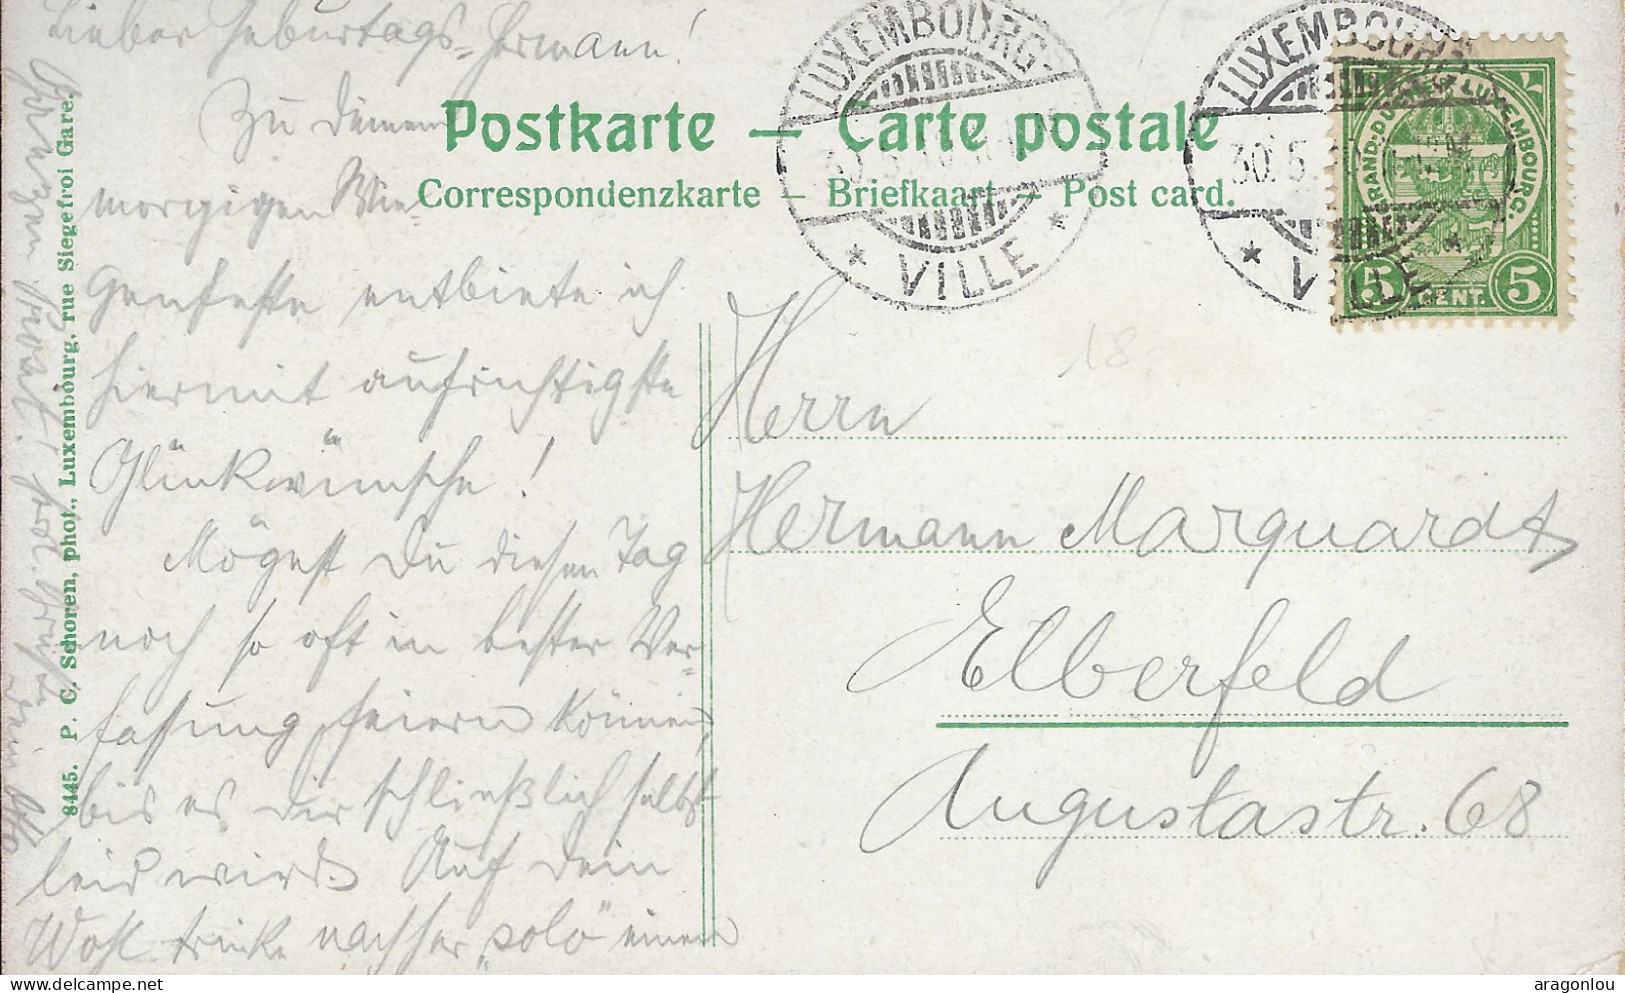 Luxembourg - Luxemburg  -   Mandat De Poste Internationale  De 1000Frs   1909 - Luxembourg